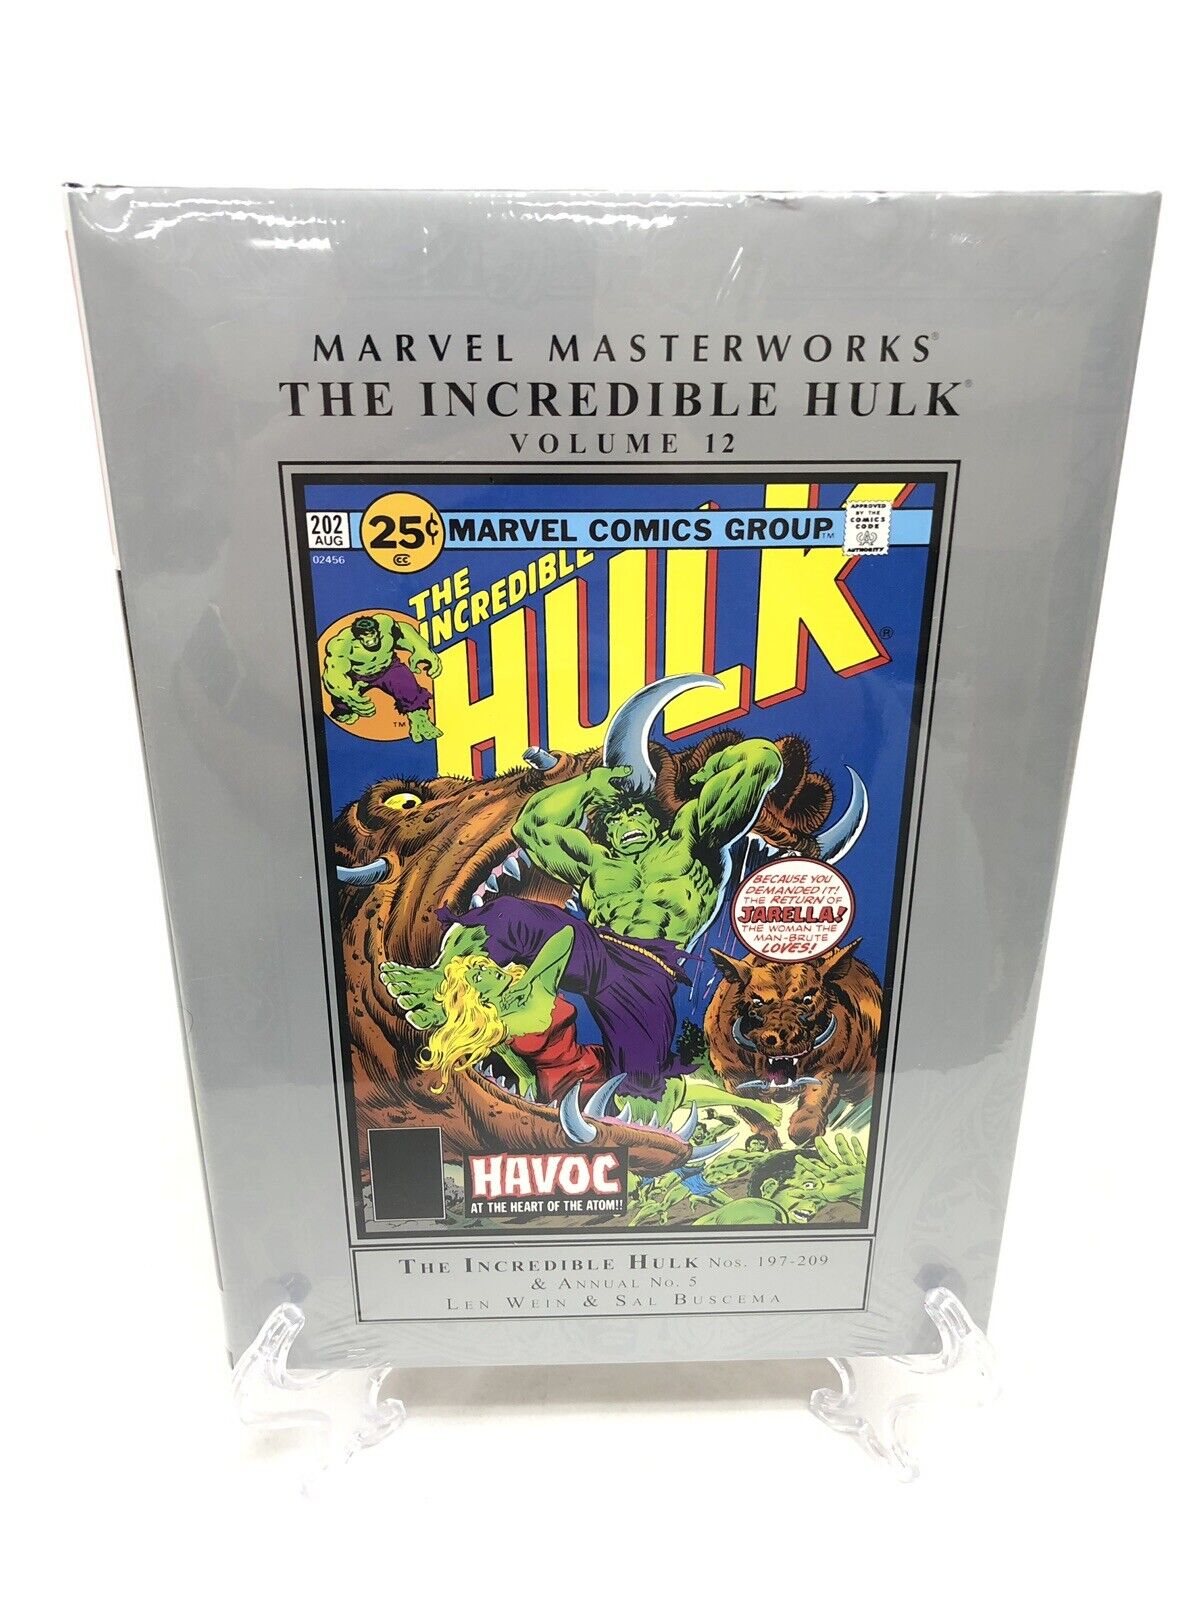 The Incredible Hulk Volume 12 Marvel Masterworks HC Hard Cover New Sealed